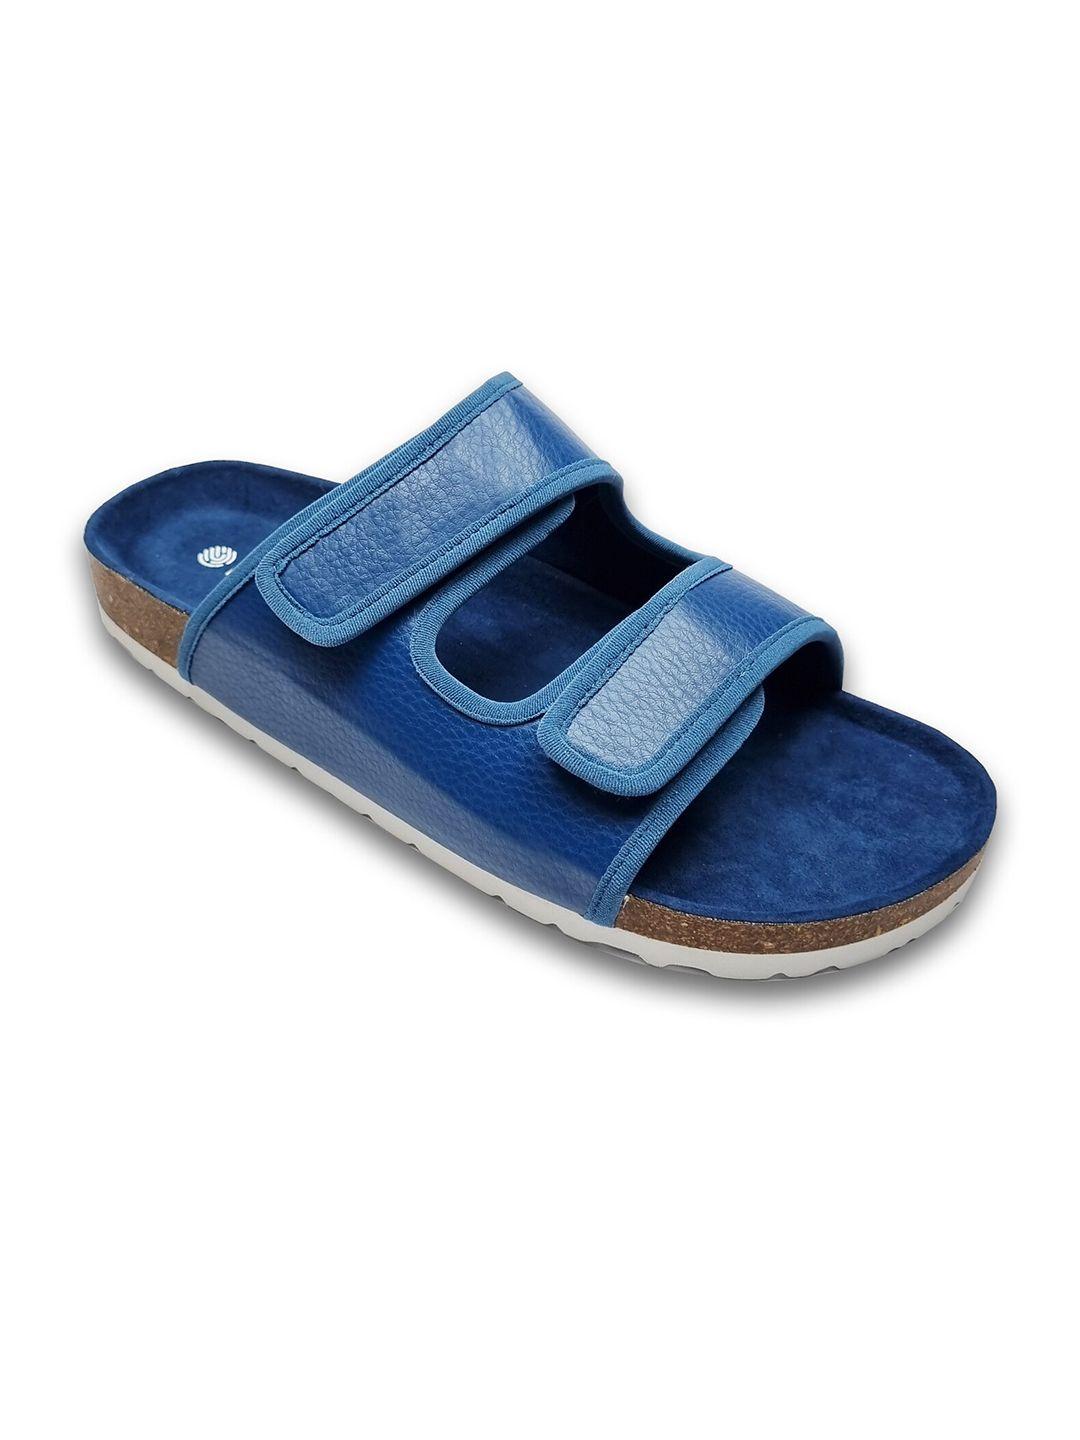 nostrain men navy blue pu comfort sandals